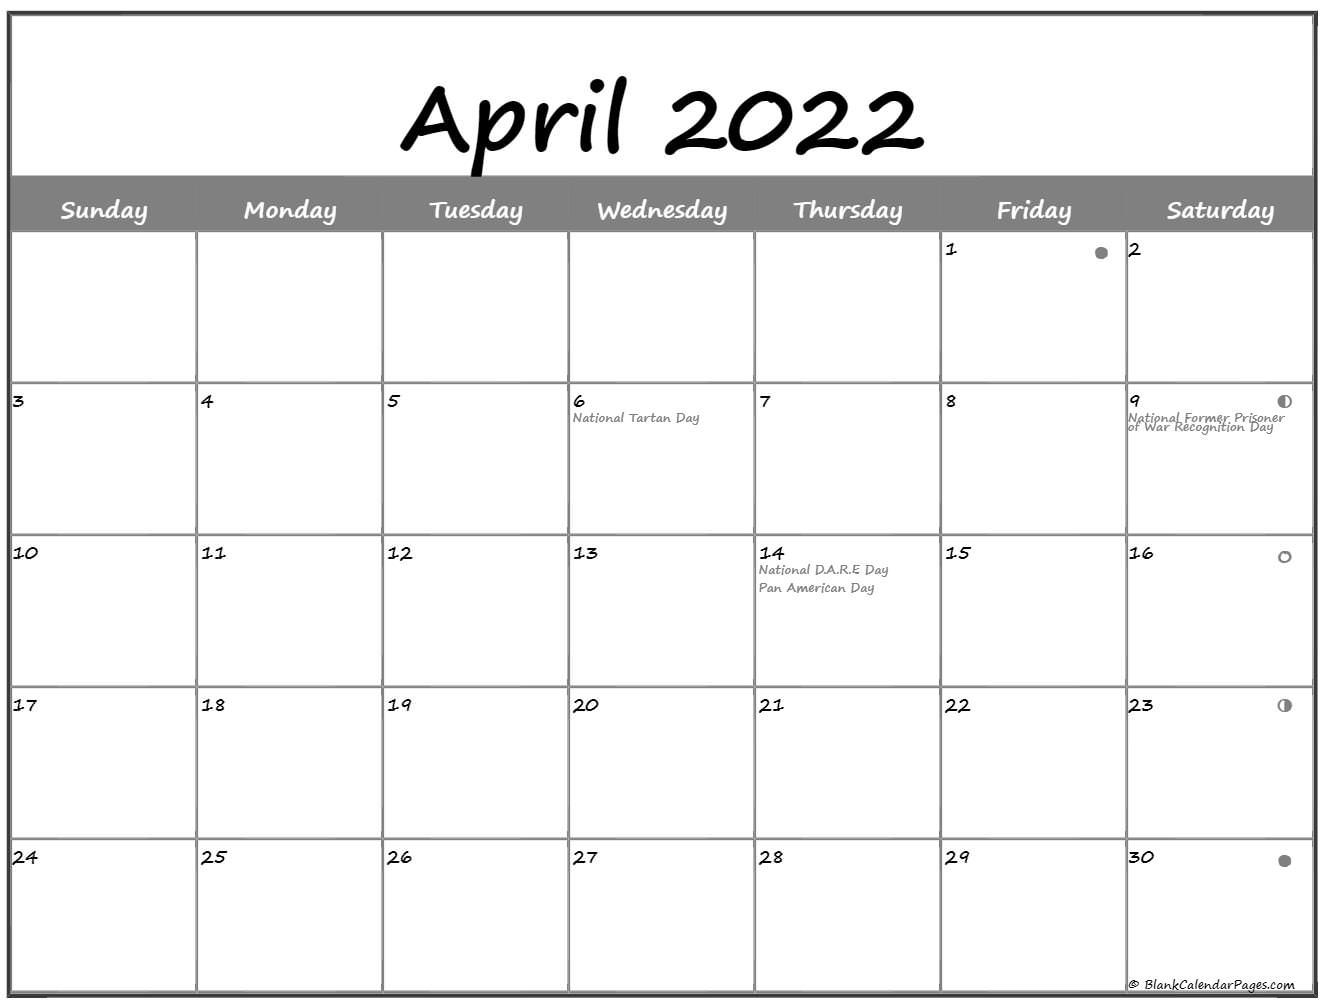 April 2022 Lunar Calendar | Moon Phase Calendar